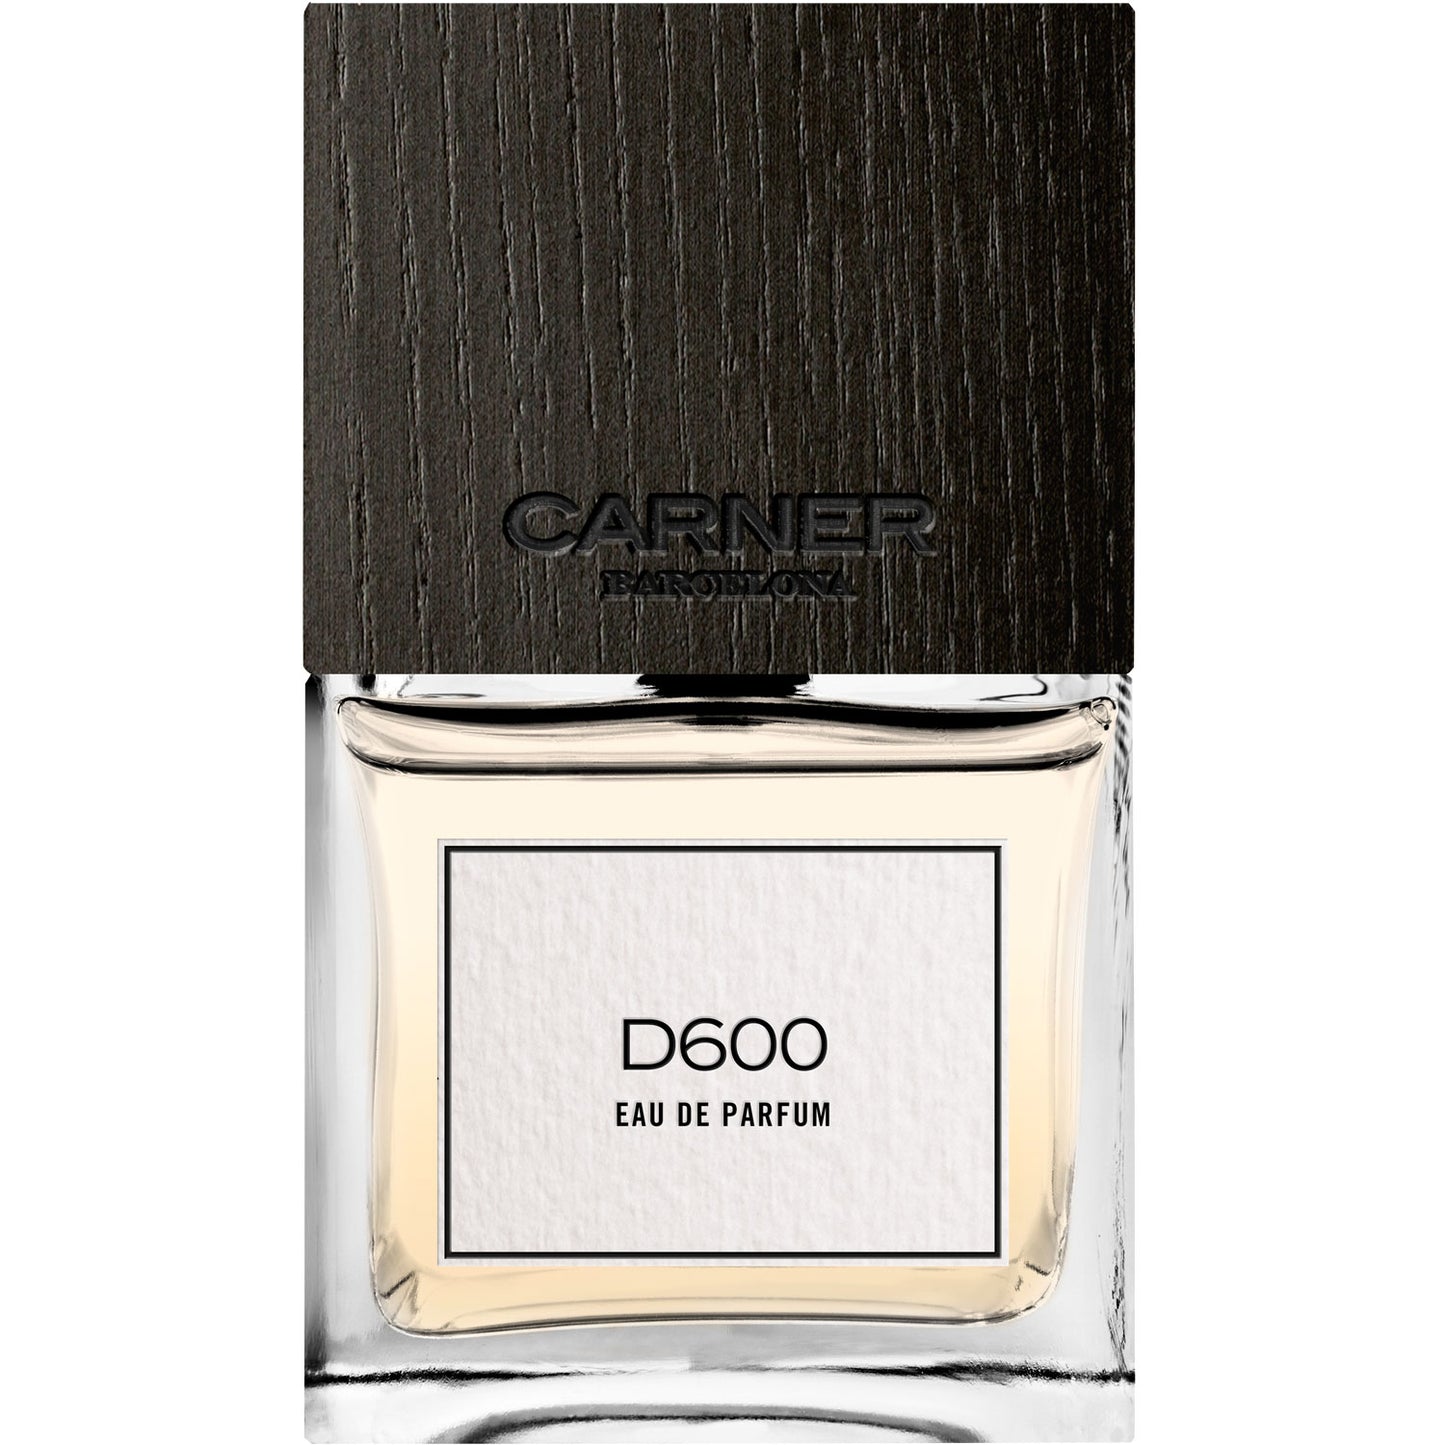 Carner Barcelona D600 Eau De Parfum Spray